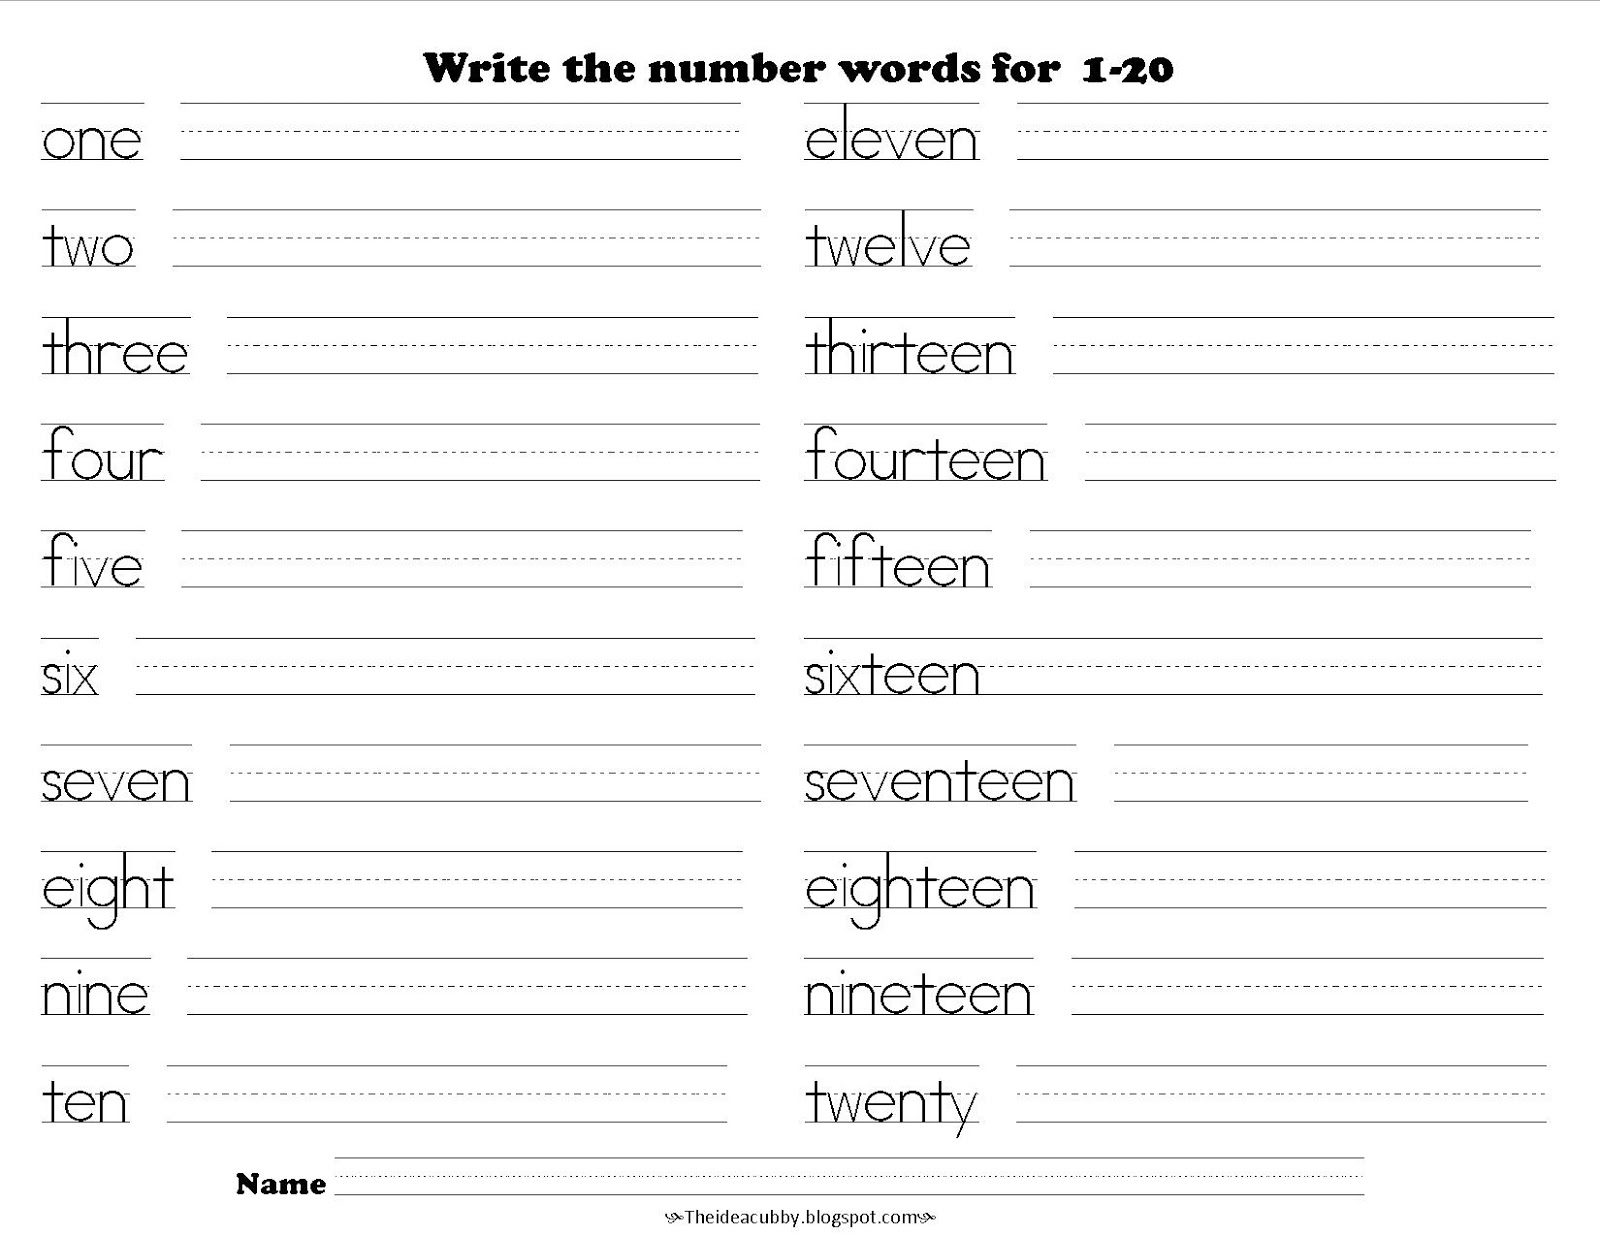 Write Number Words 1-20